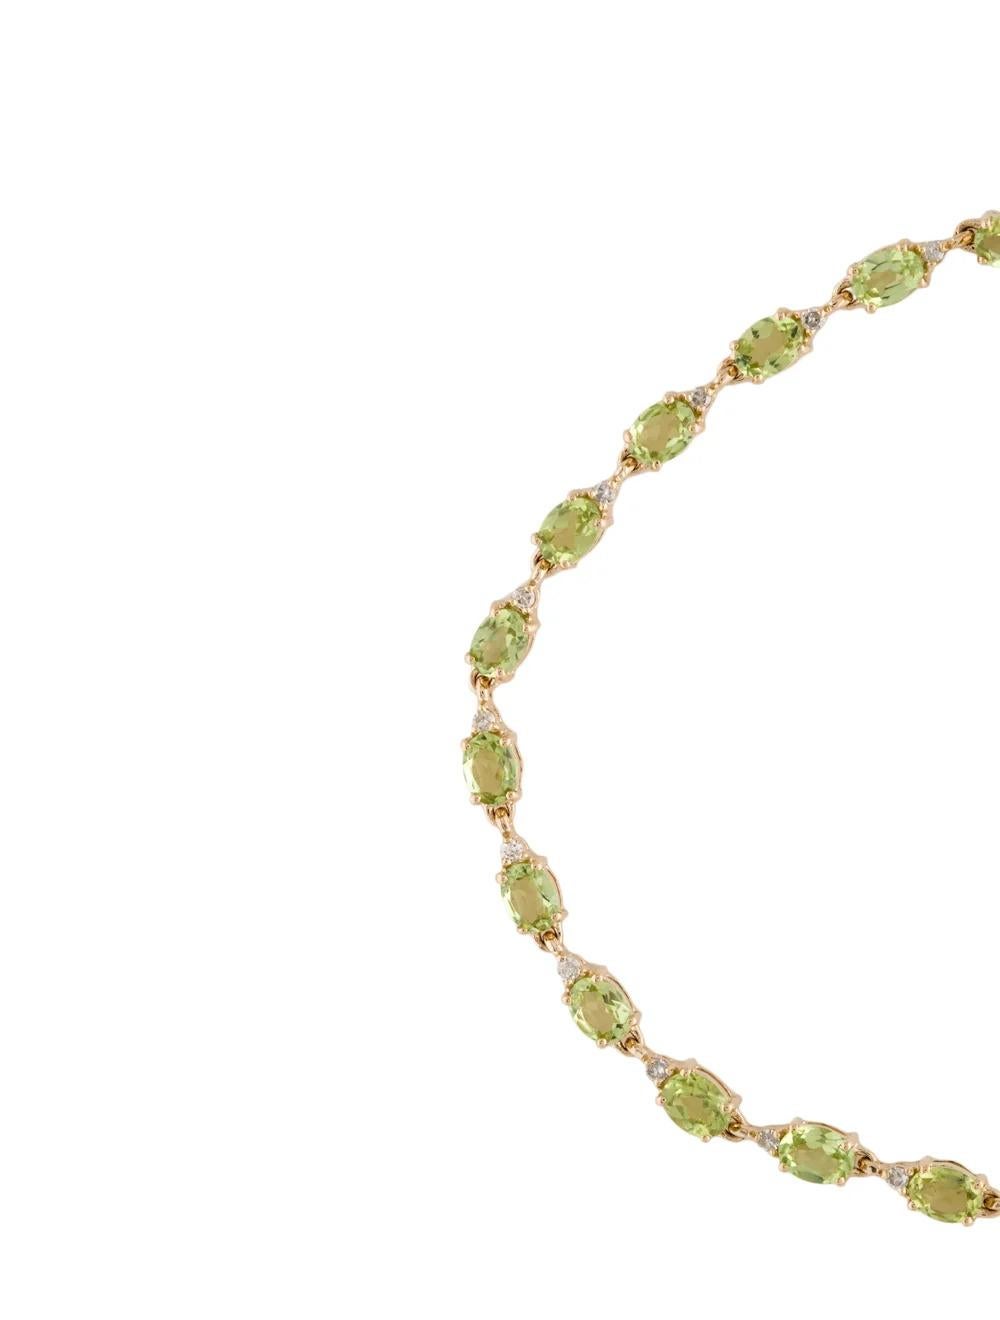 Oval Cut 14K Peridot & Diamond Link Bracelet - Elegant Design, Green Gemstones, Sparkling For Sale